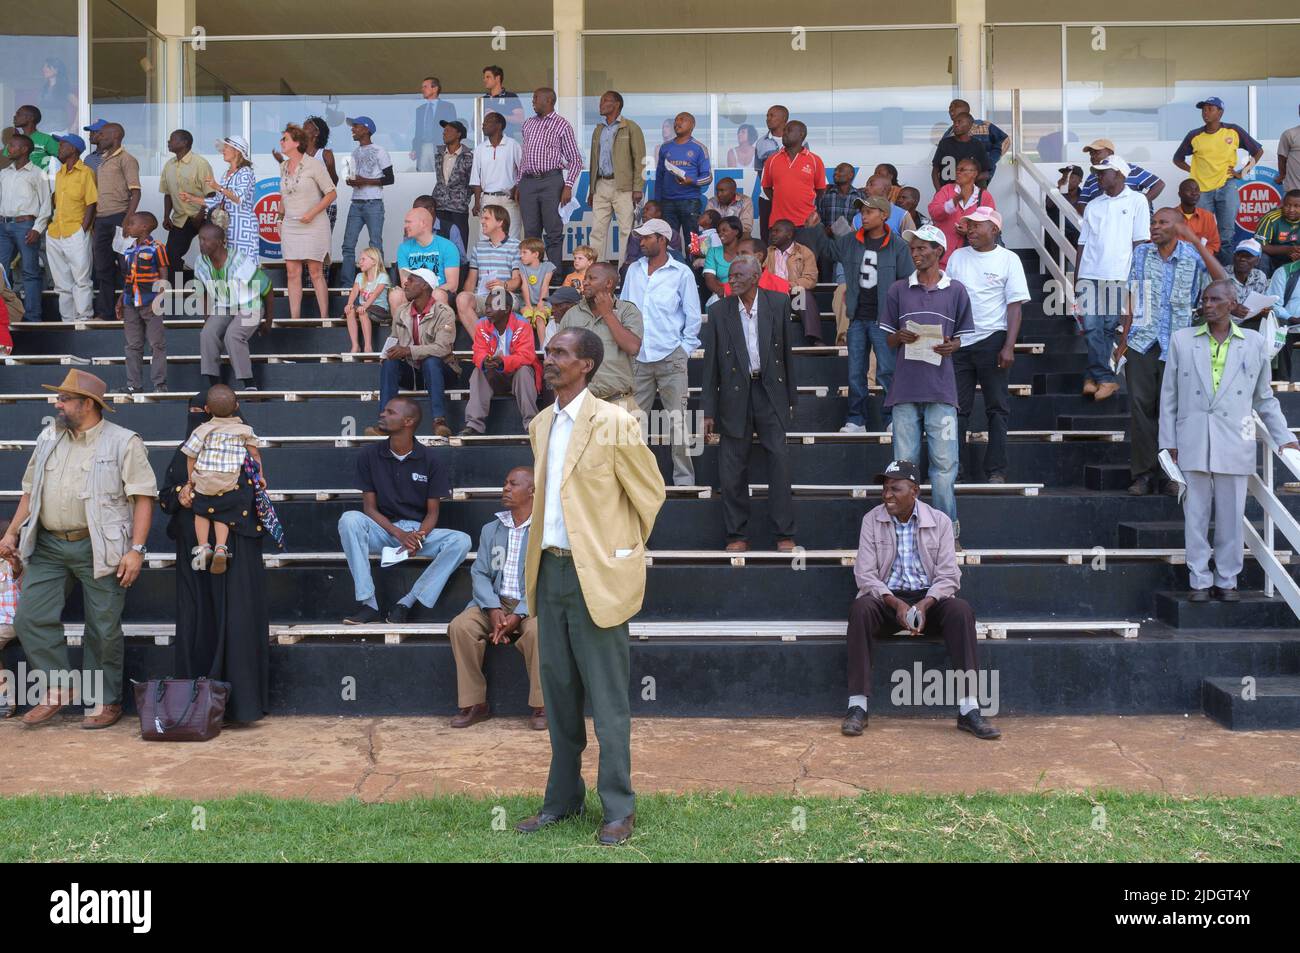 Spectators watching a horses race, Ngong Racecourse, Ngong Road, Nairobi, Kenya.  1 Mar 2015 Stock Photo